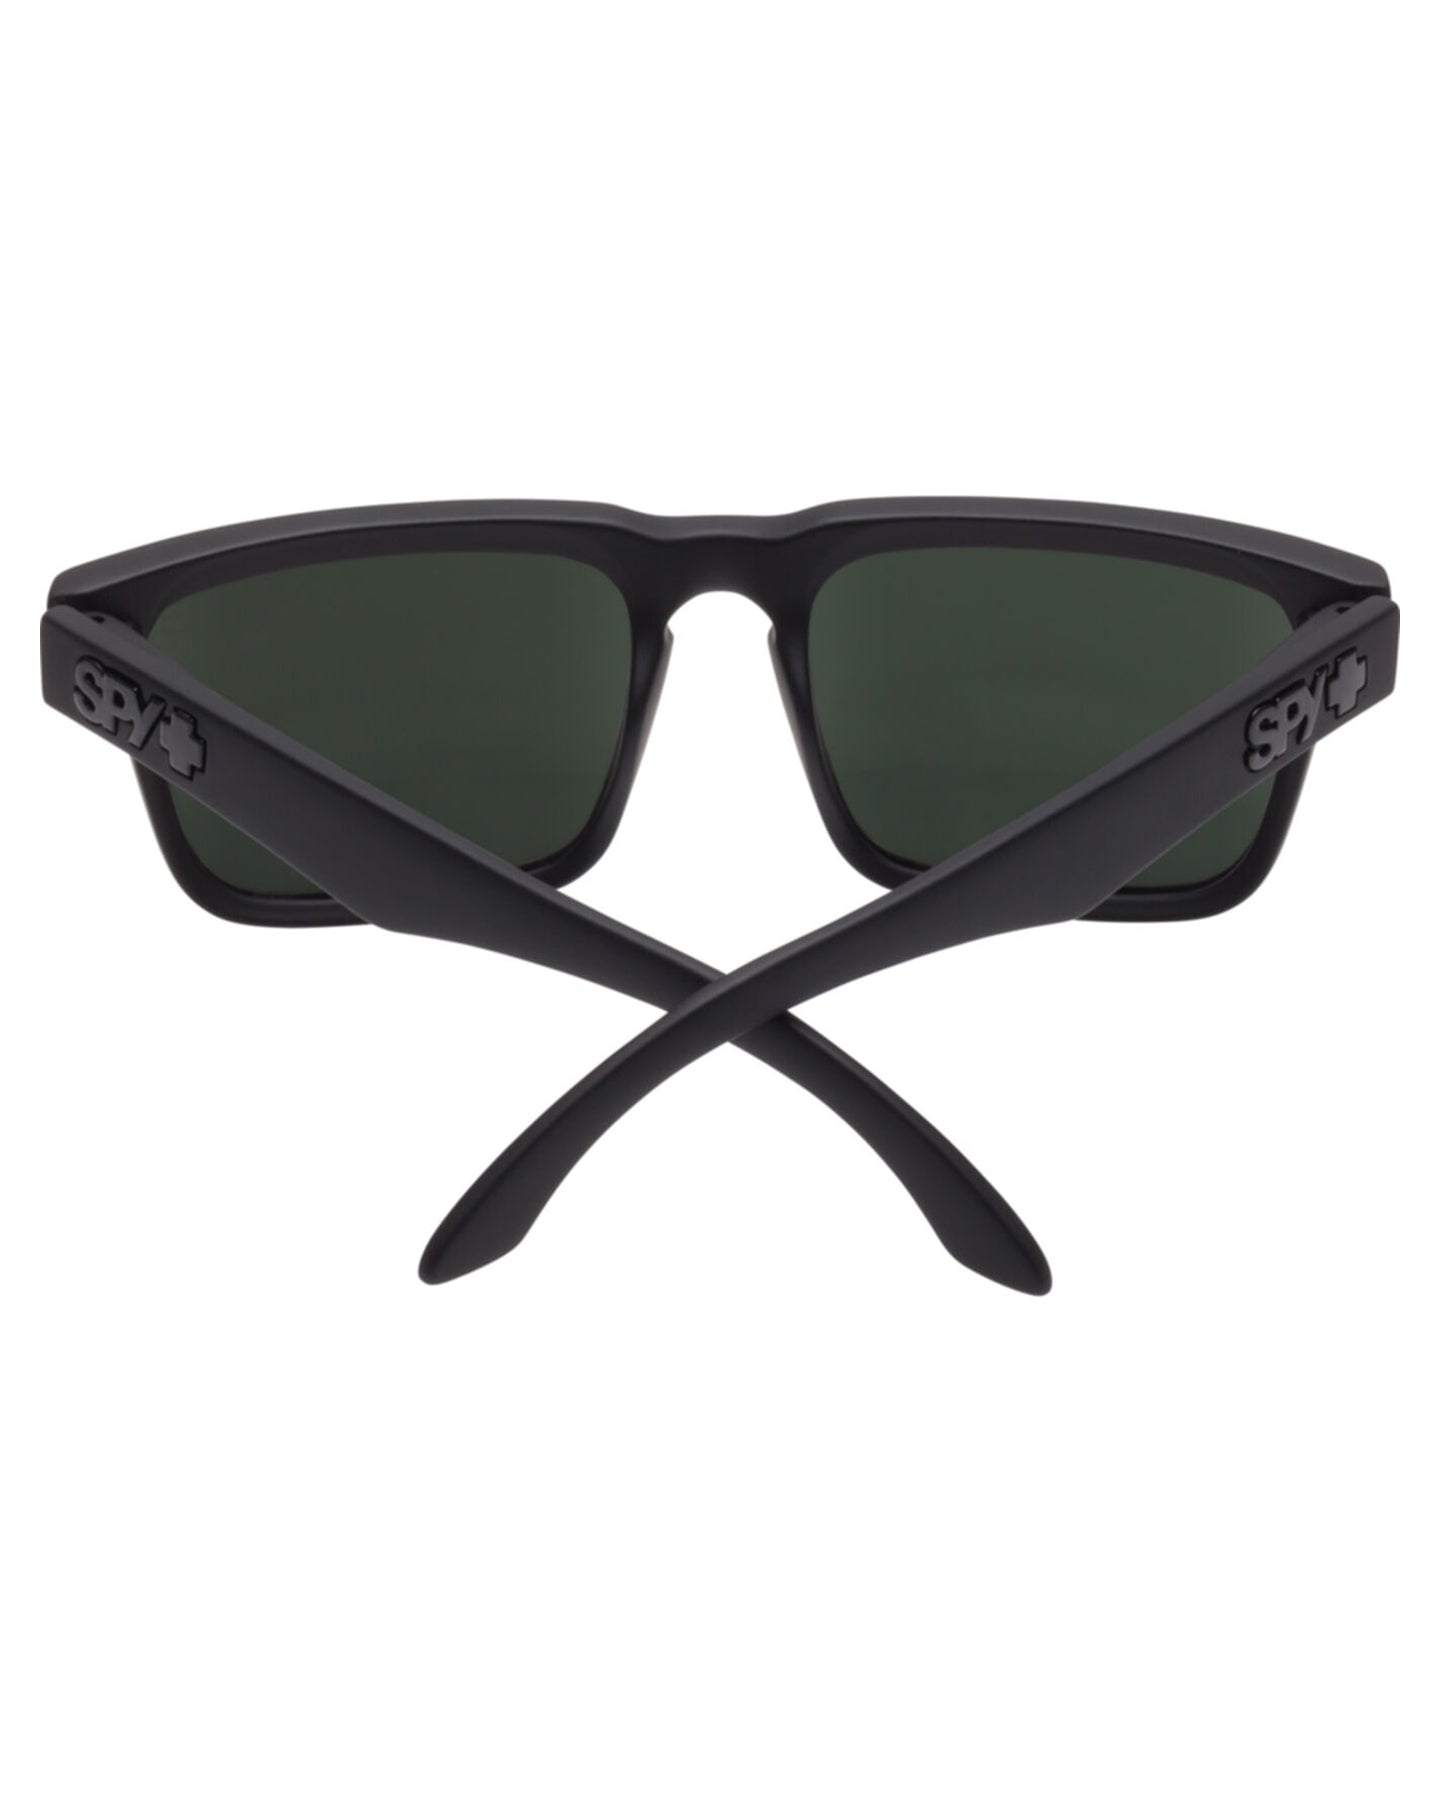 Spy Helm Soft Matte Black - Happy Gray Green Sunglasses - Trojan Wake Ski Snow